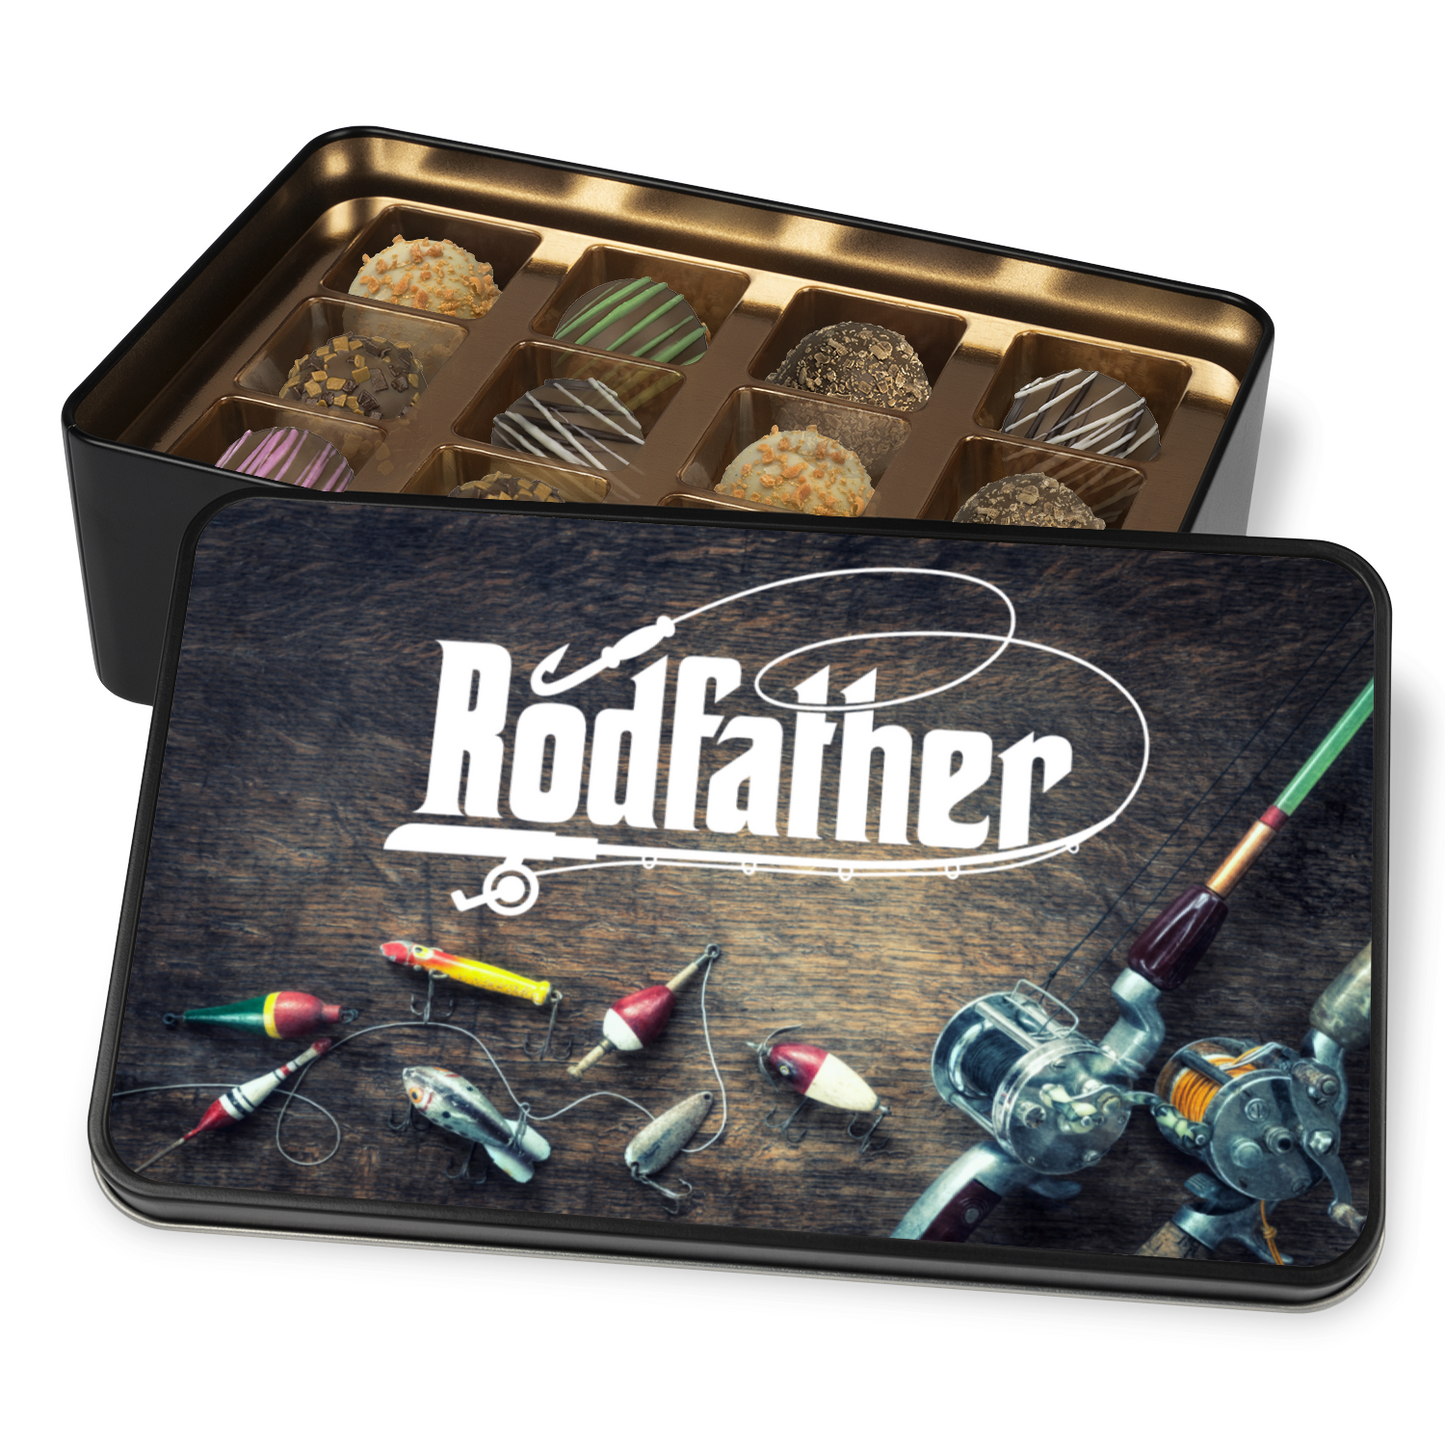 Fathers Day Gift - Artisan Homemade Chocolate Truffles - Chocolate Gift Box - Fishing Dad Gift - Mardonyx Candy